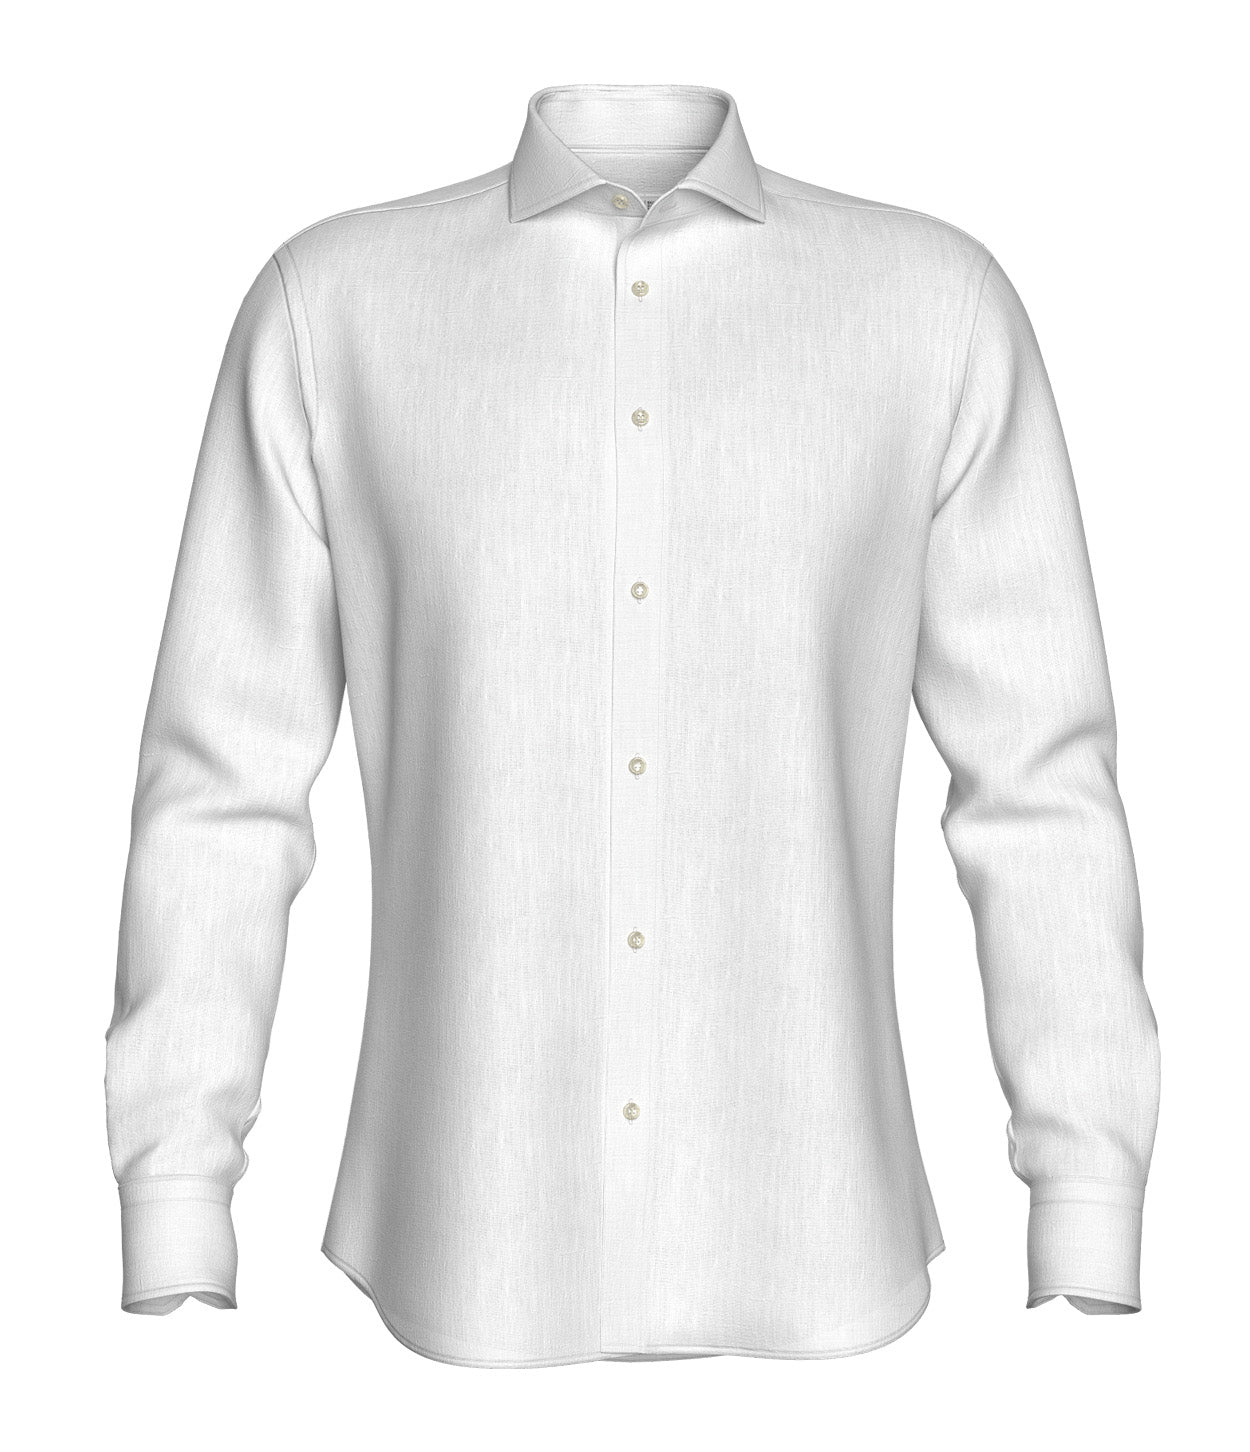 modelado digital de camisa blanca lino manga larga